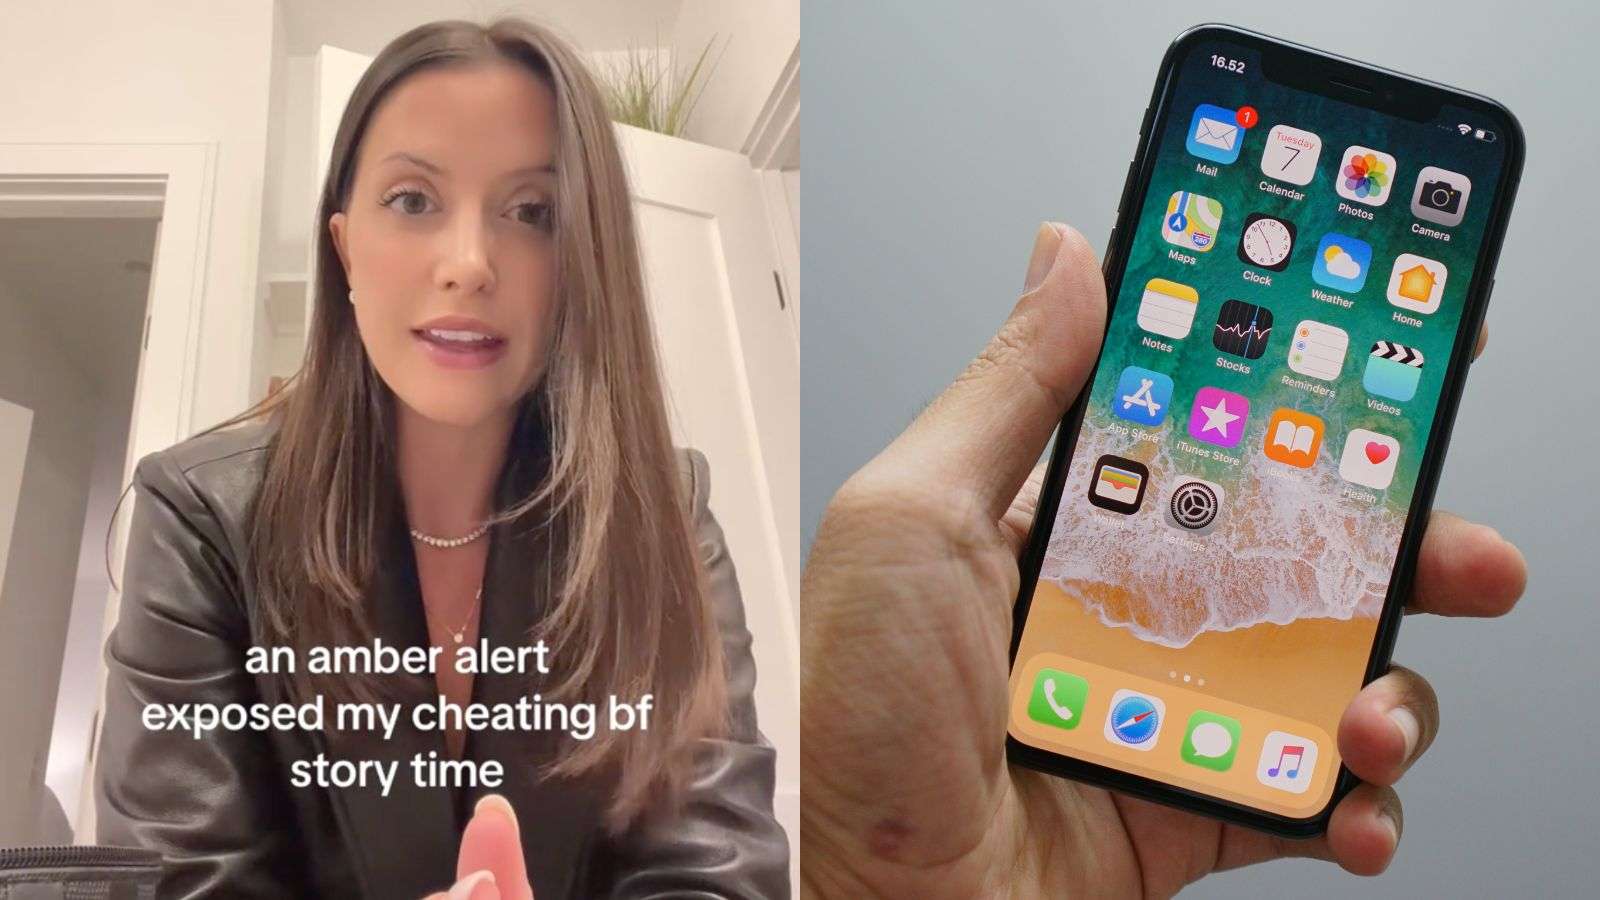 Woman catches cheating boyfriend through iPhone's AMBER alert